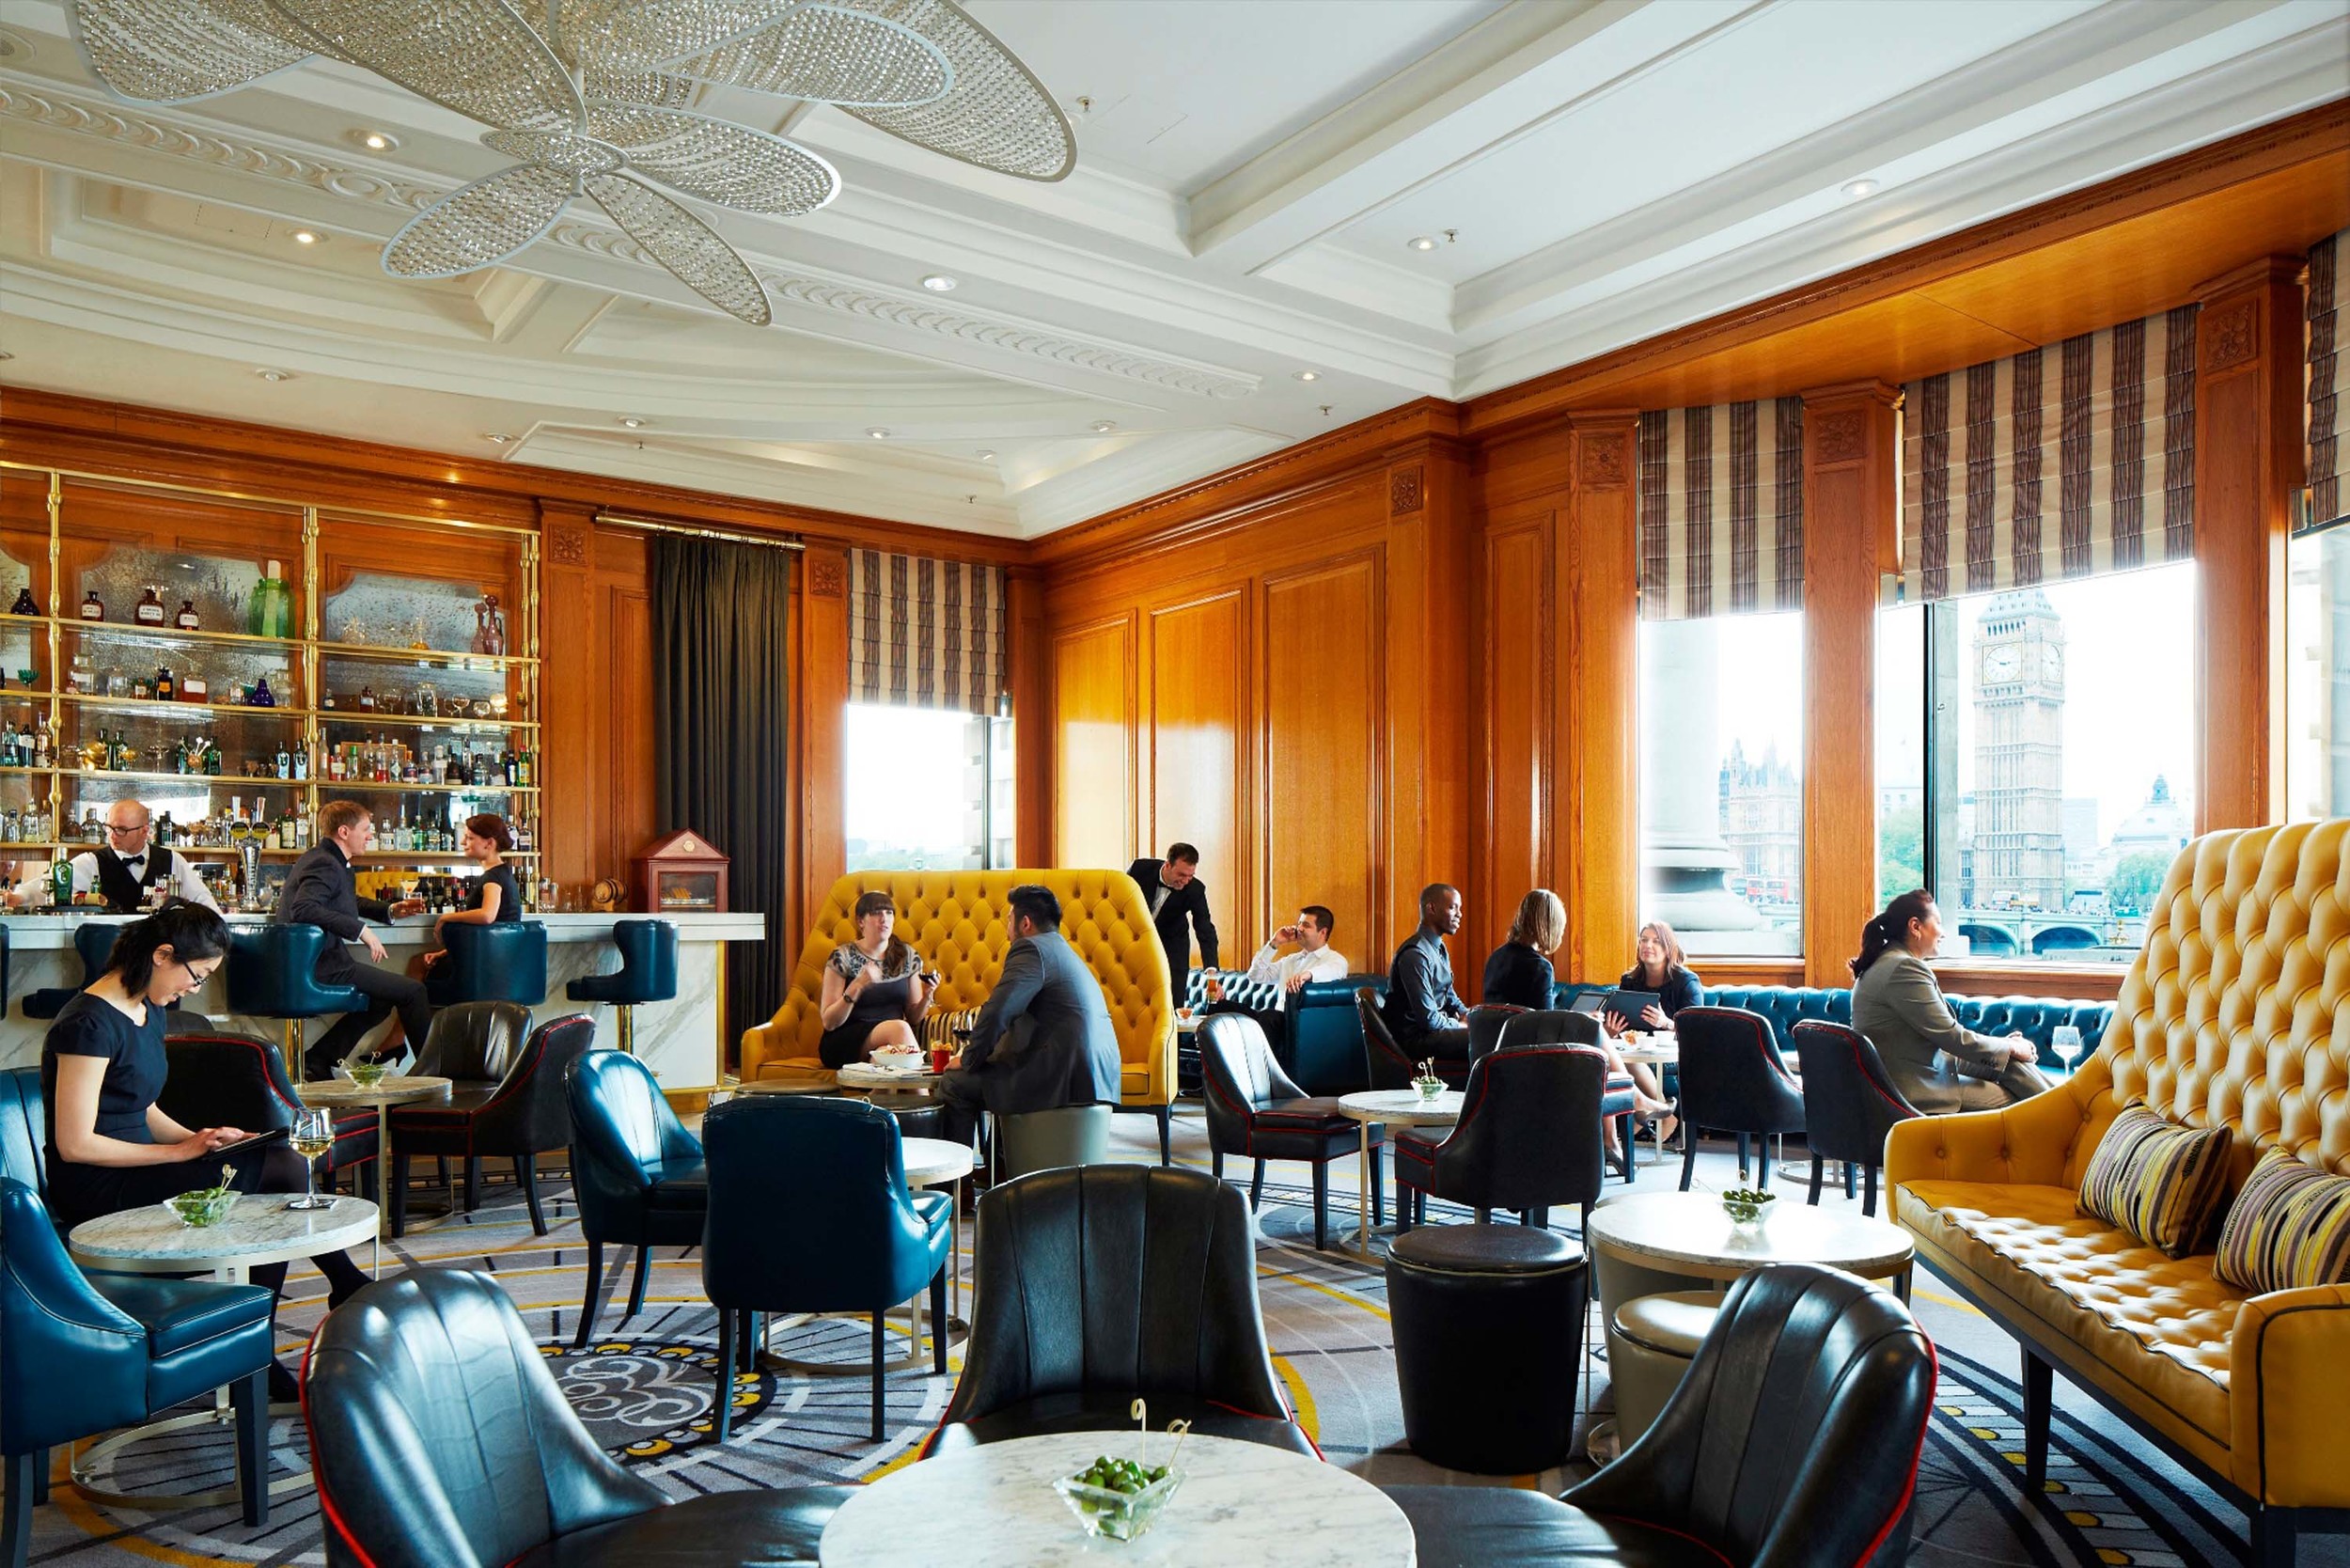 Gillray's bar at London Marriott County Hall hotel